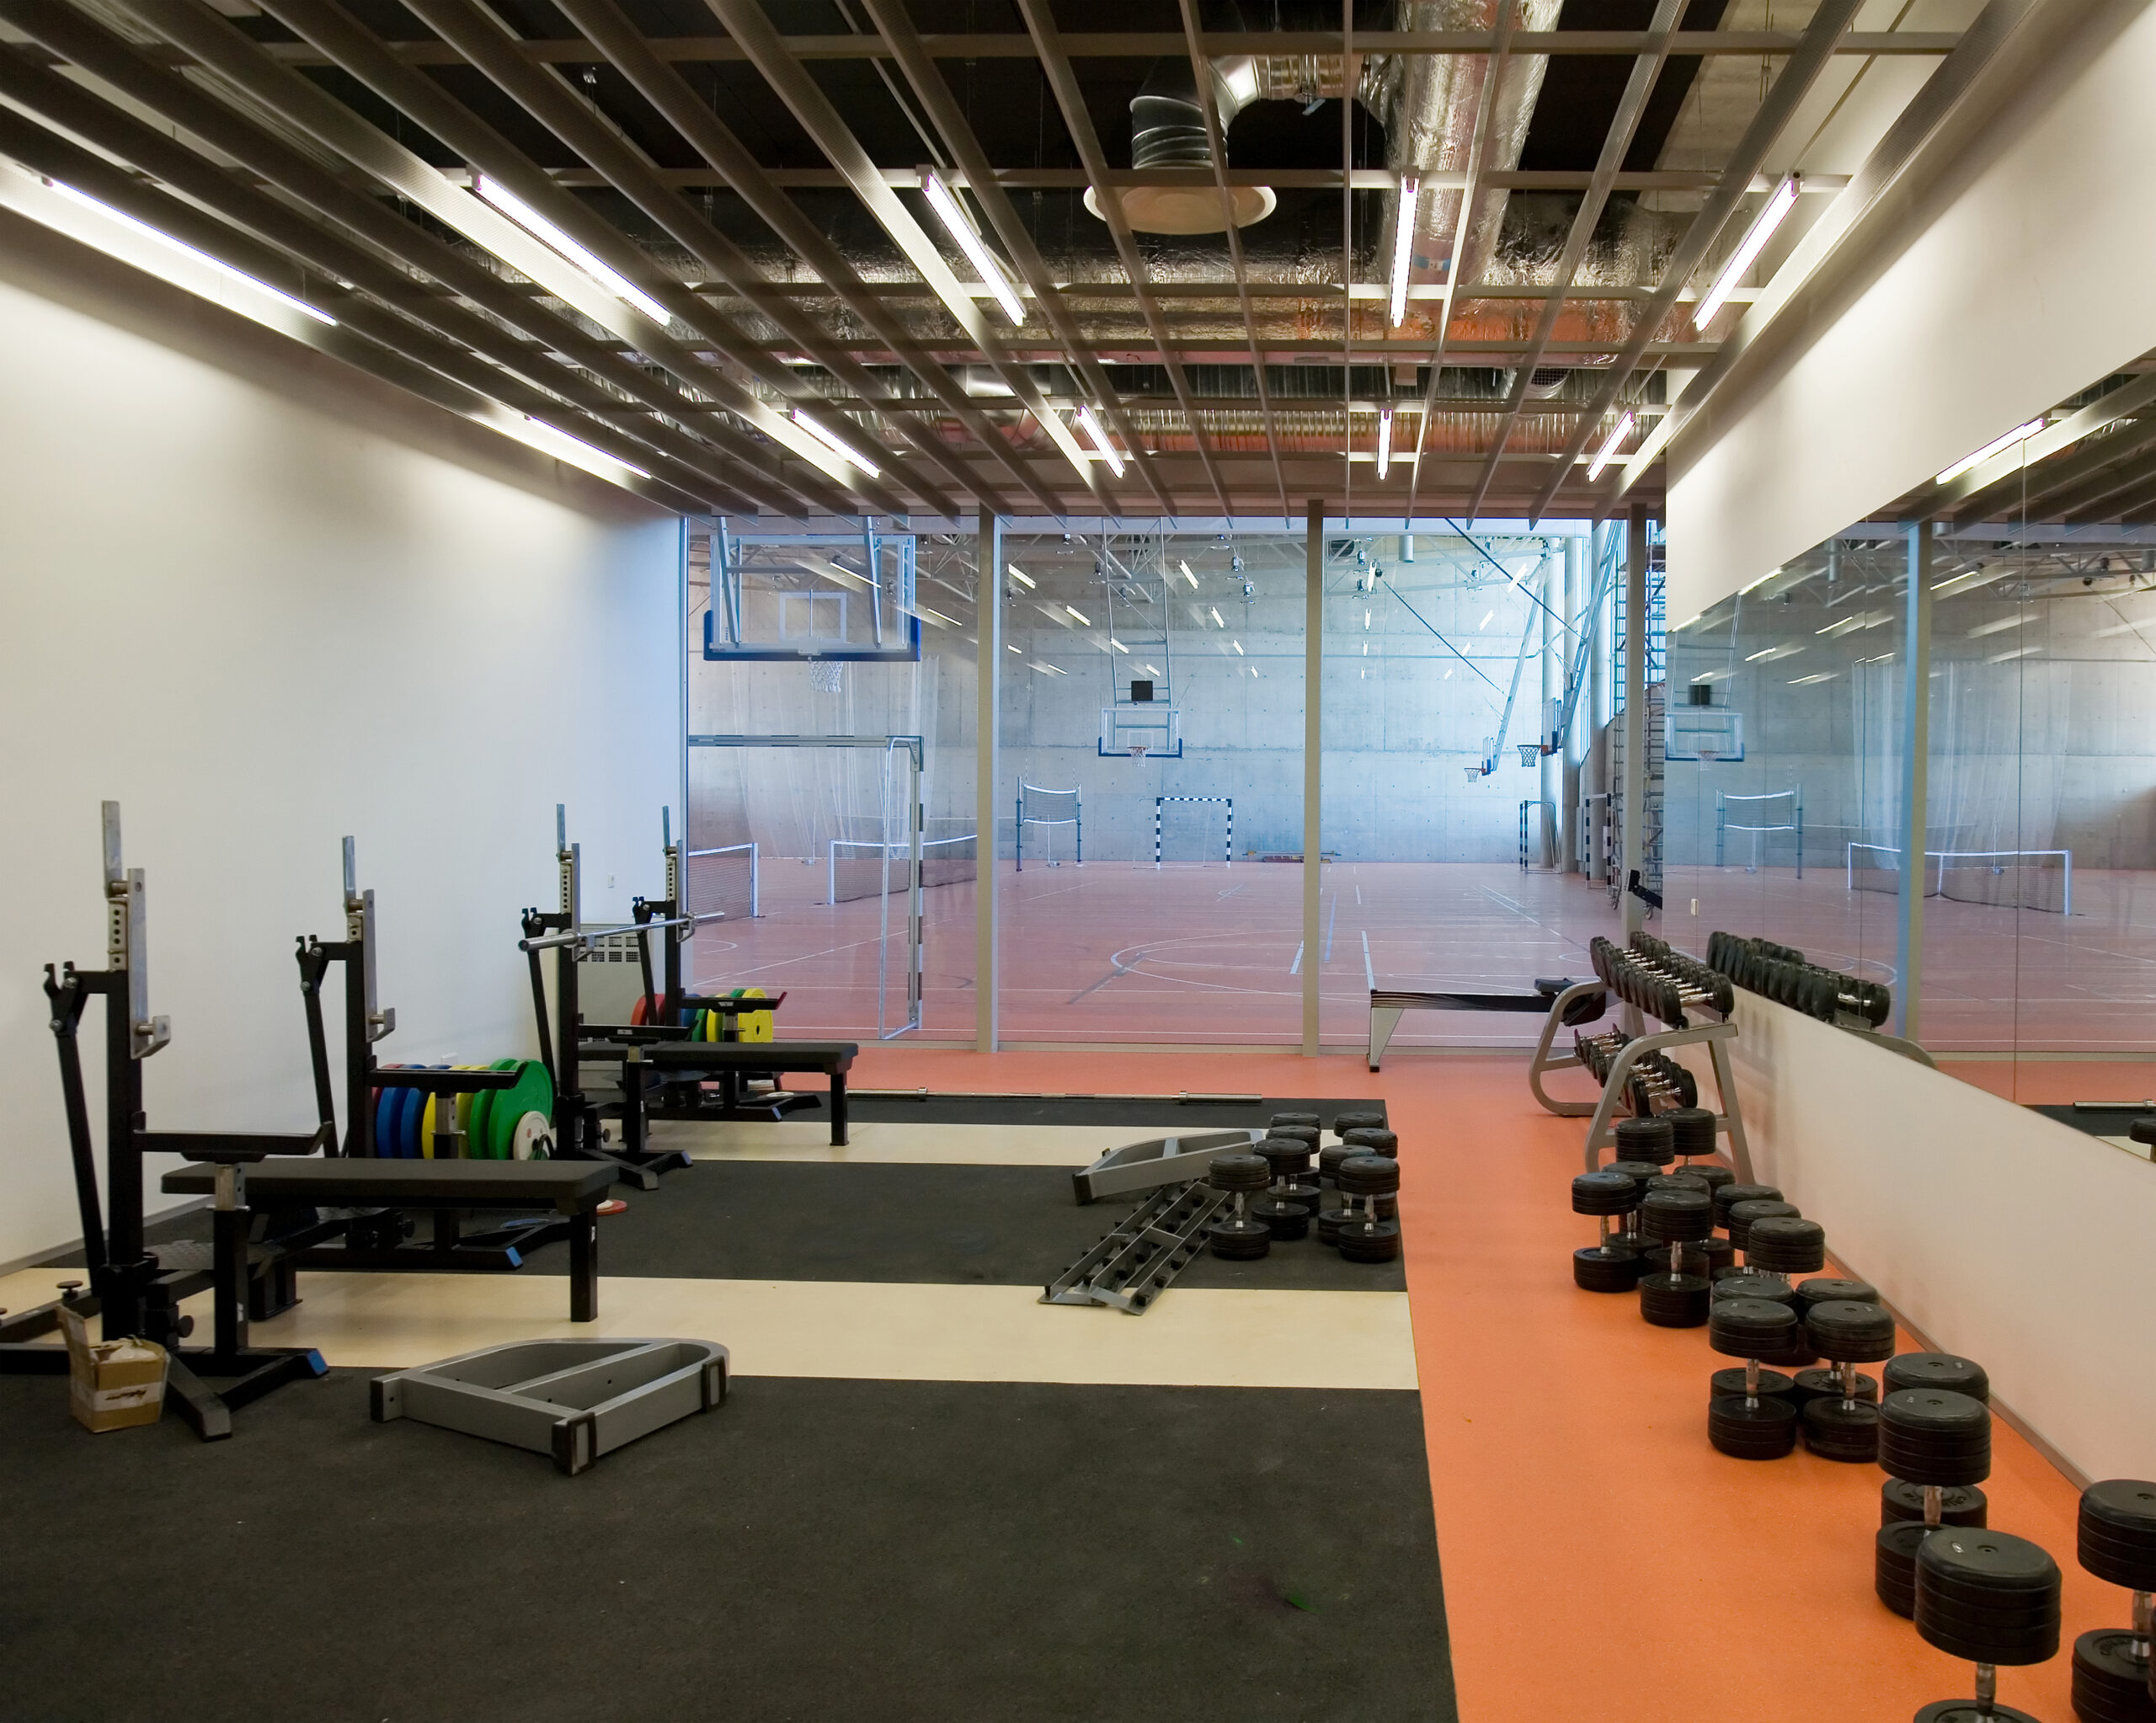 Tartu, Estonia,Weight Room in a Gymnasium